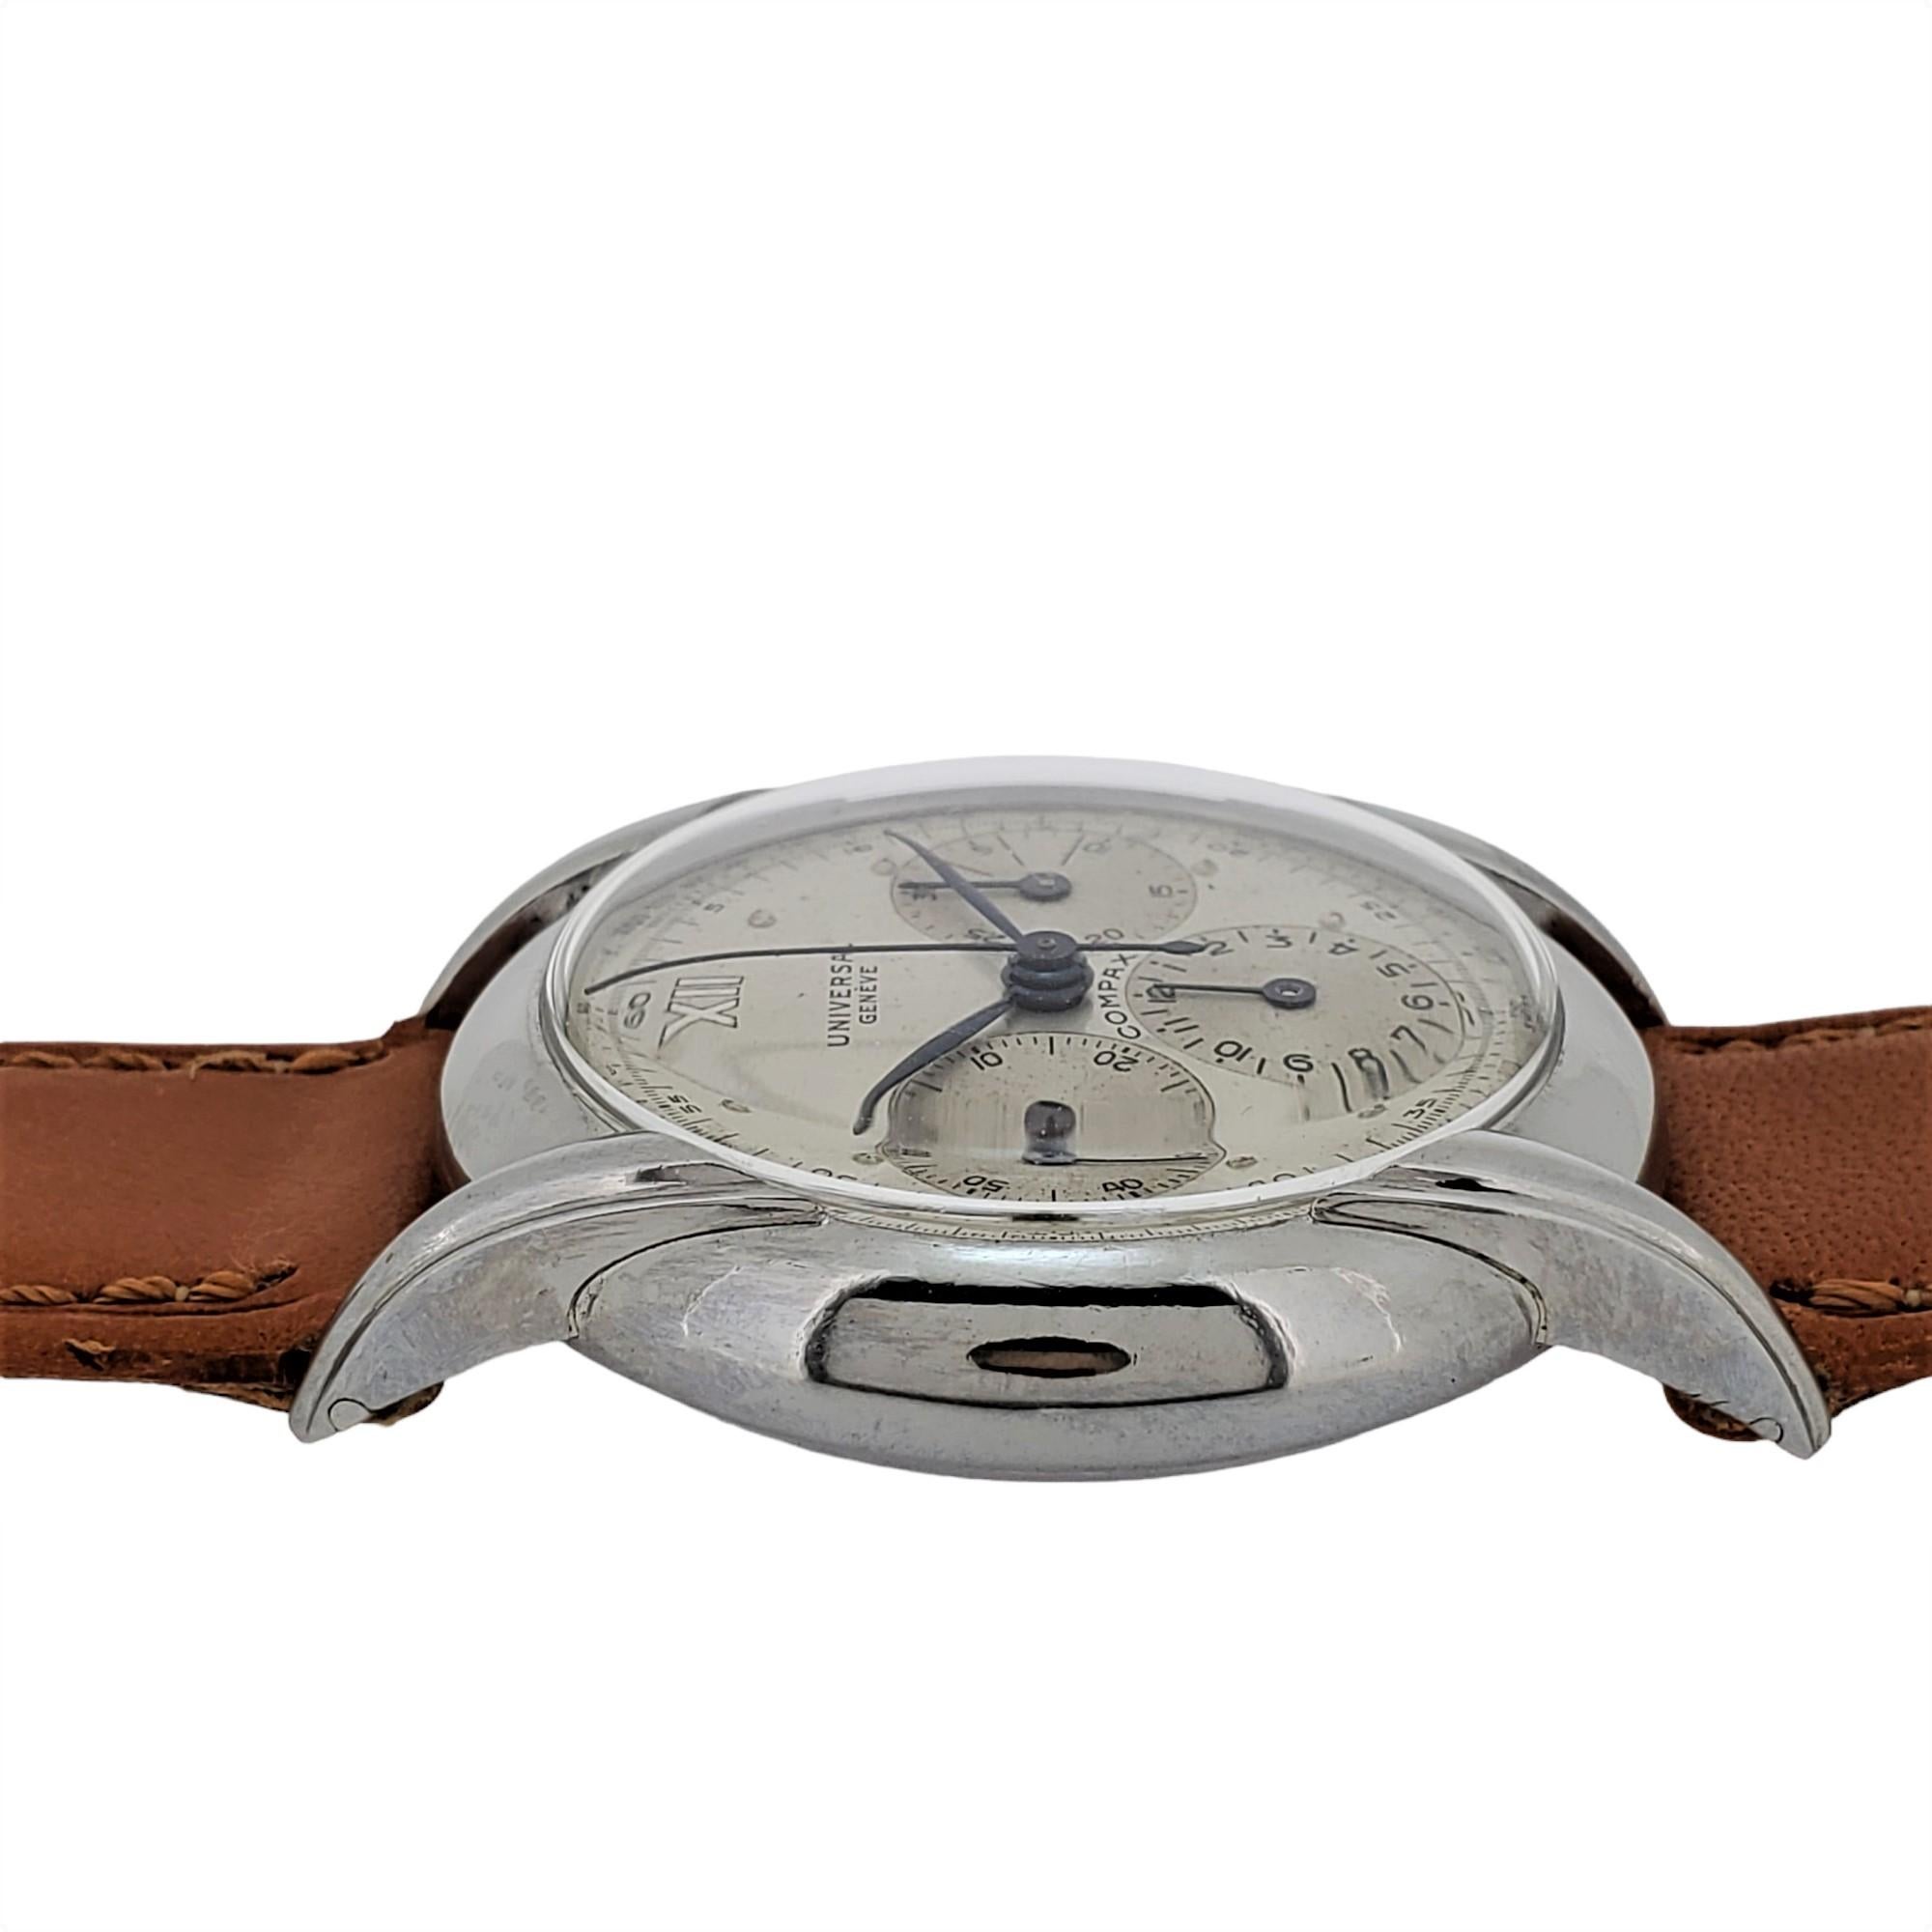 36mm chronograph watch